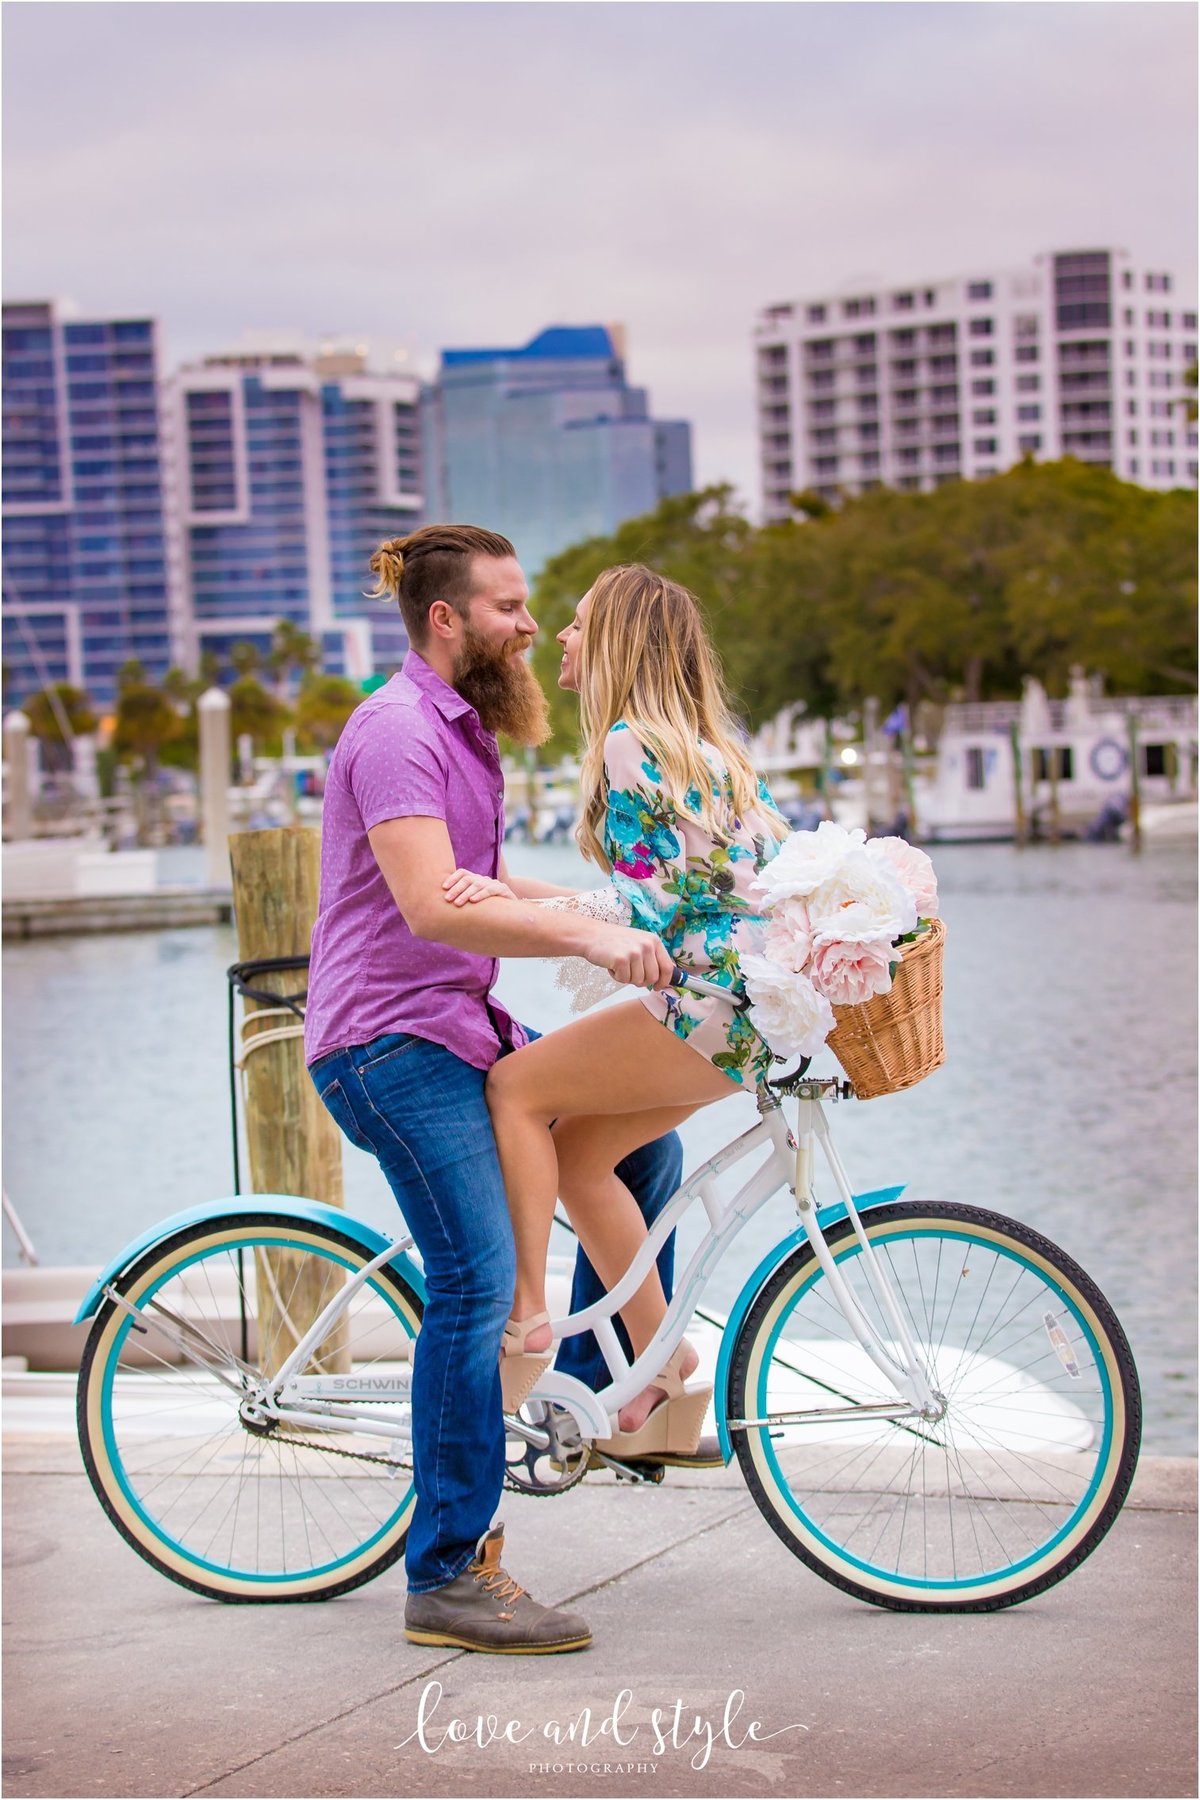 Cute couple on a blue beach bike in downtown Sarasota